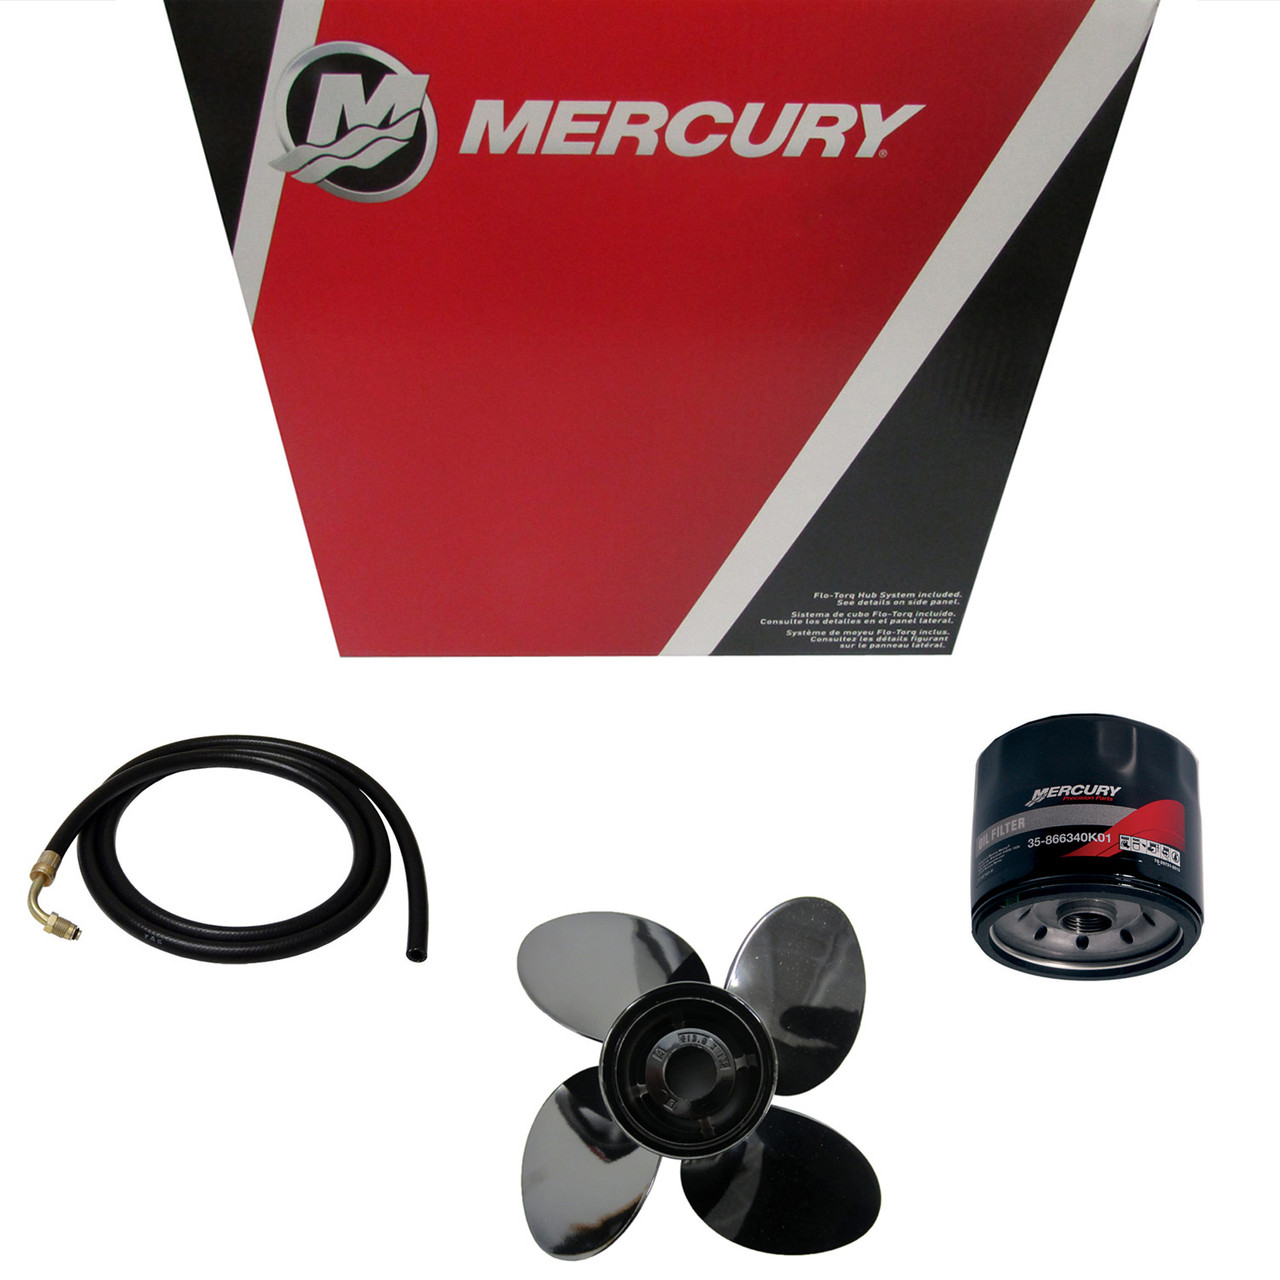 Mercury Marine / Mercruiser New OEM Switch Kt-3P W/Mk, 87-897716K02